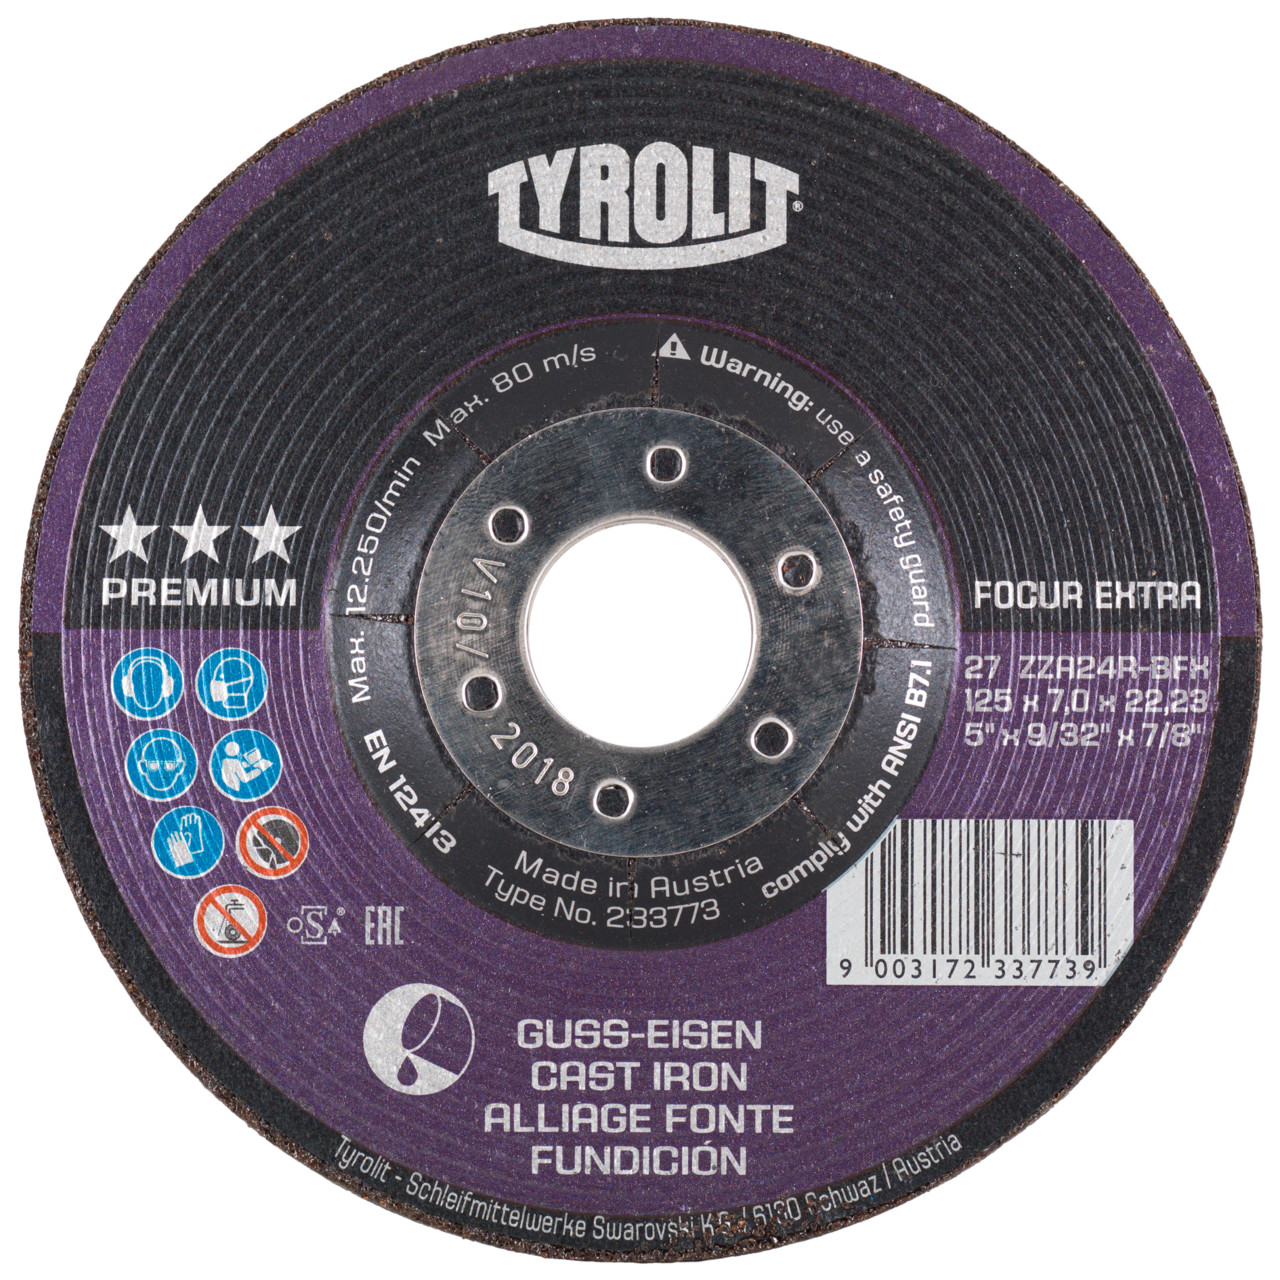 Tyrolit Roughing disc DxUxH 178x7x22.23 FOCUR Extra for cast iron, shape: 27 - offset version, Art. 233759